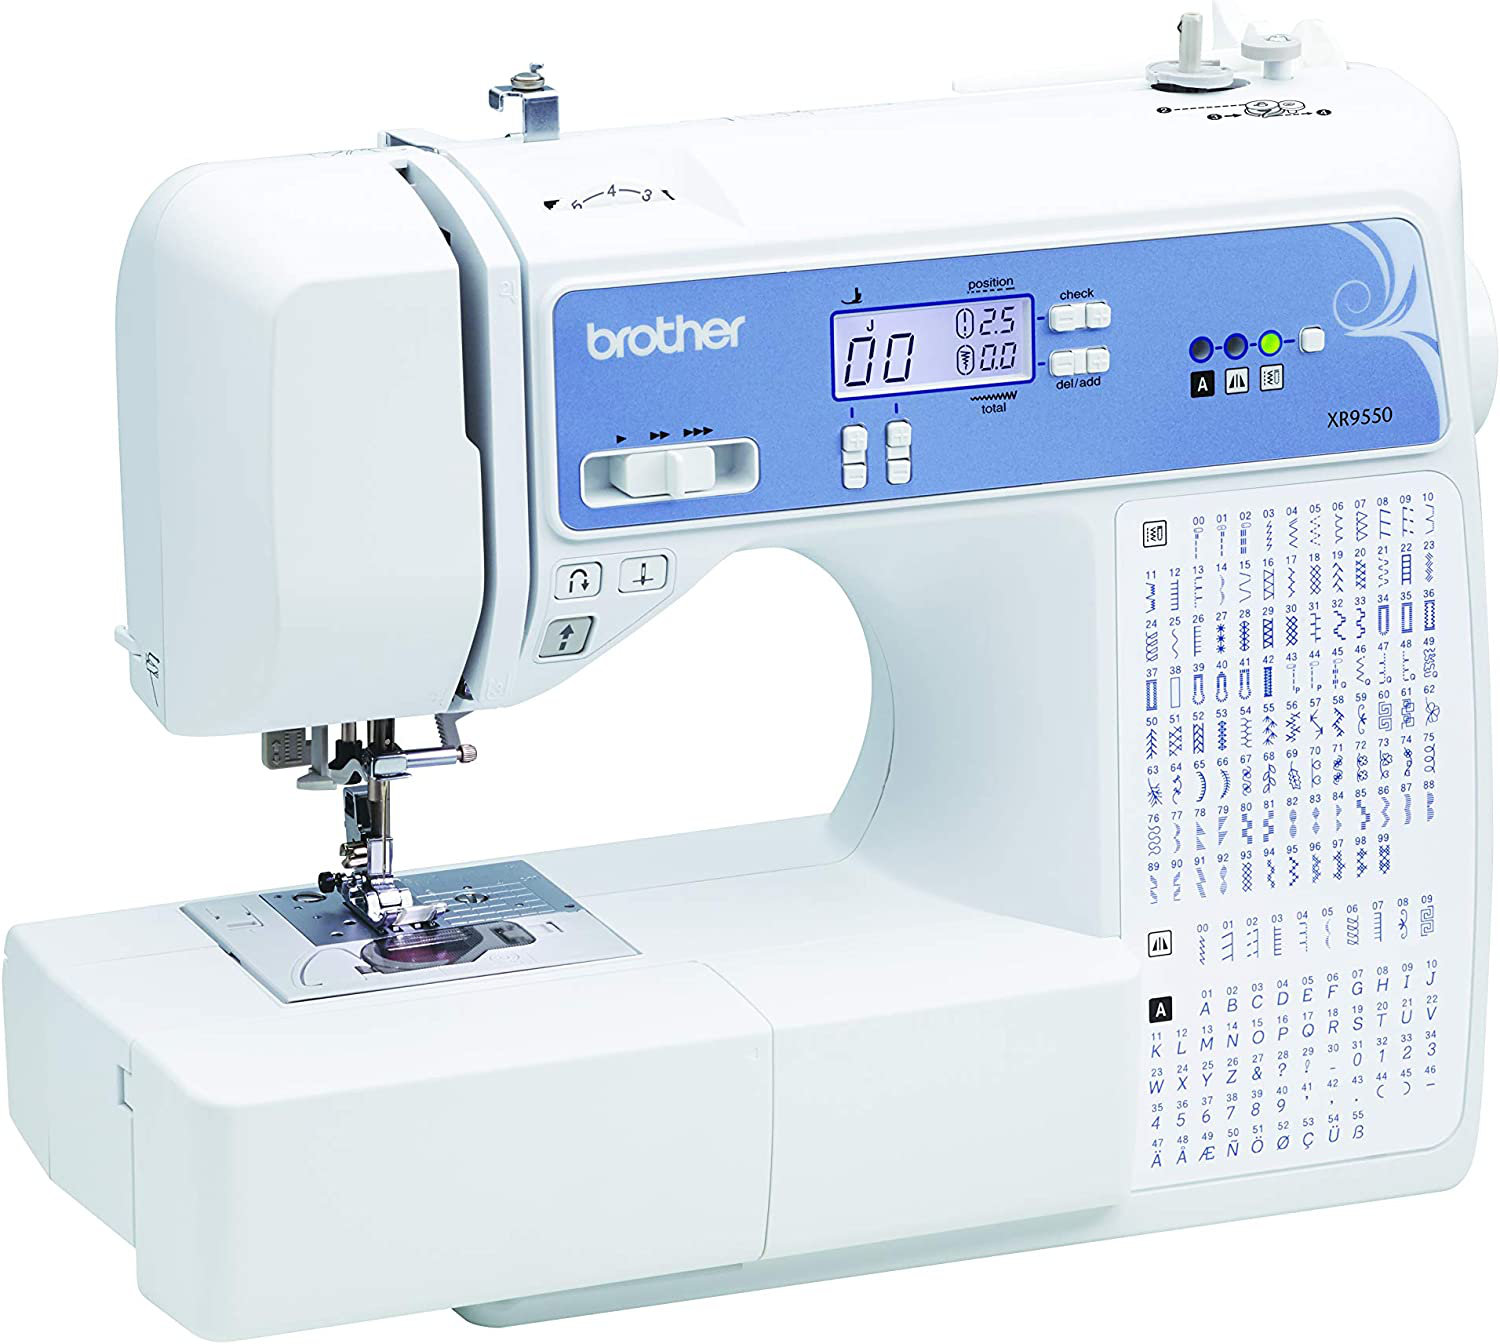 Sewing Machine Electric Handheld Sewing Machine at Rs 230